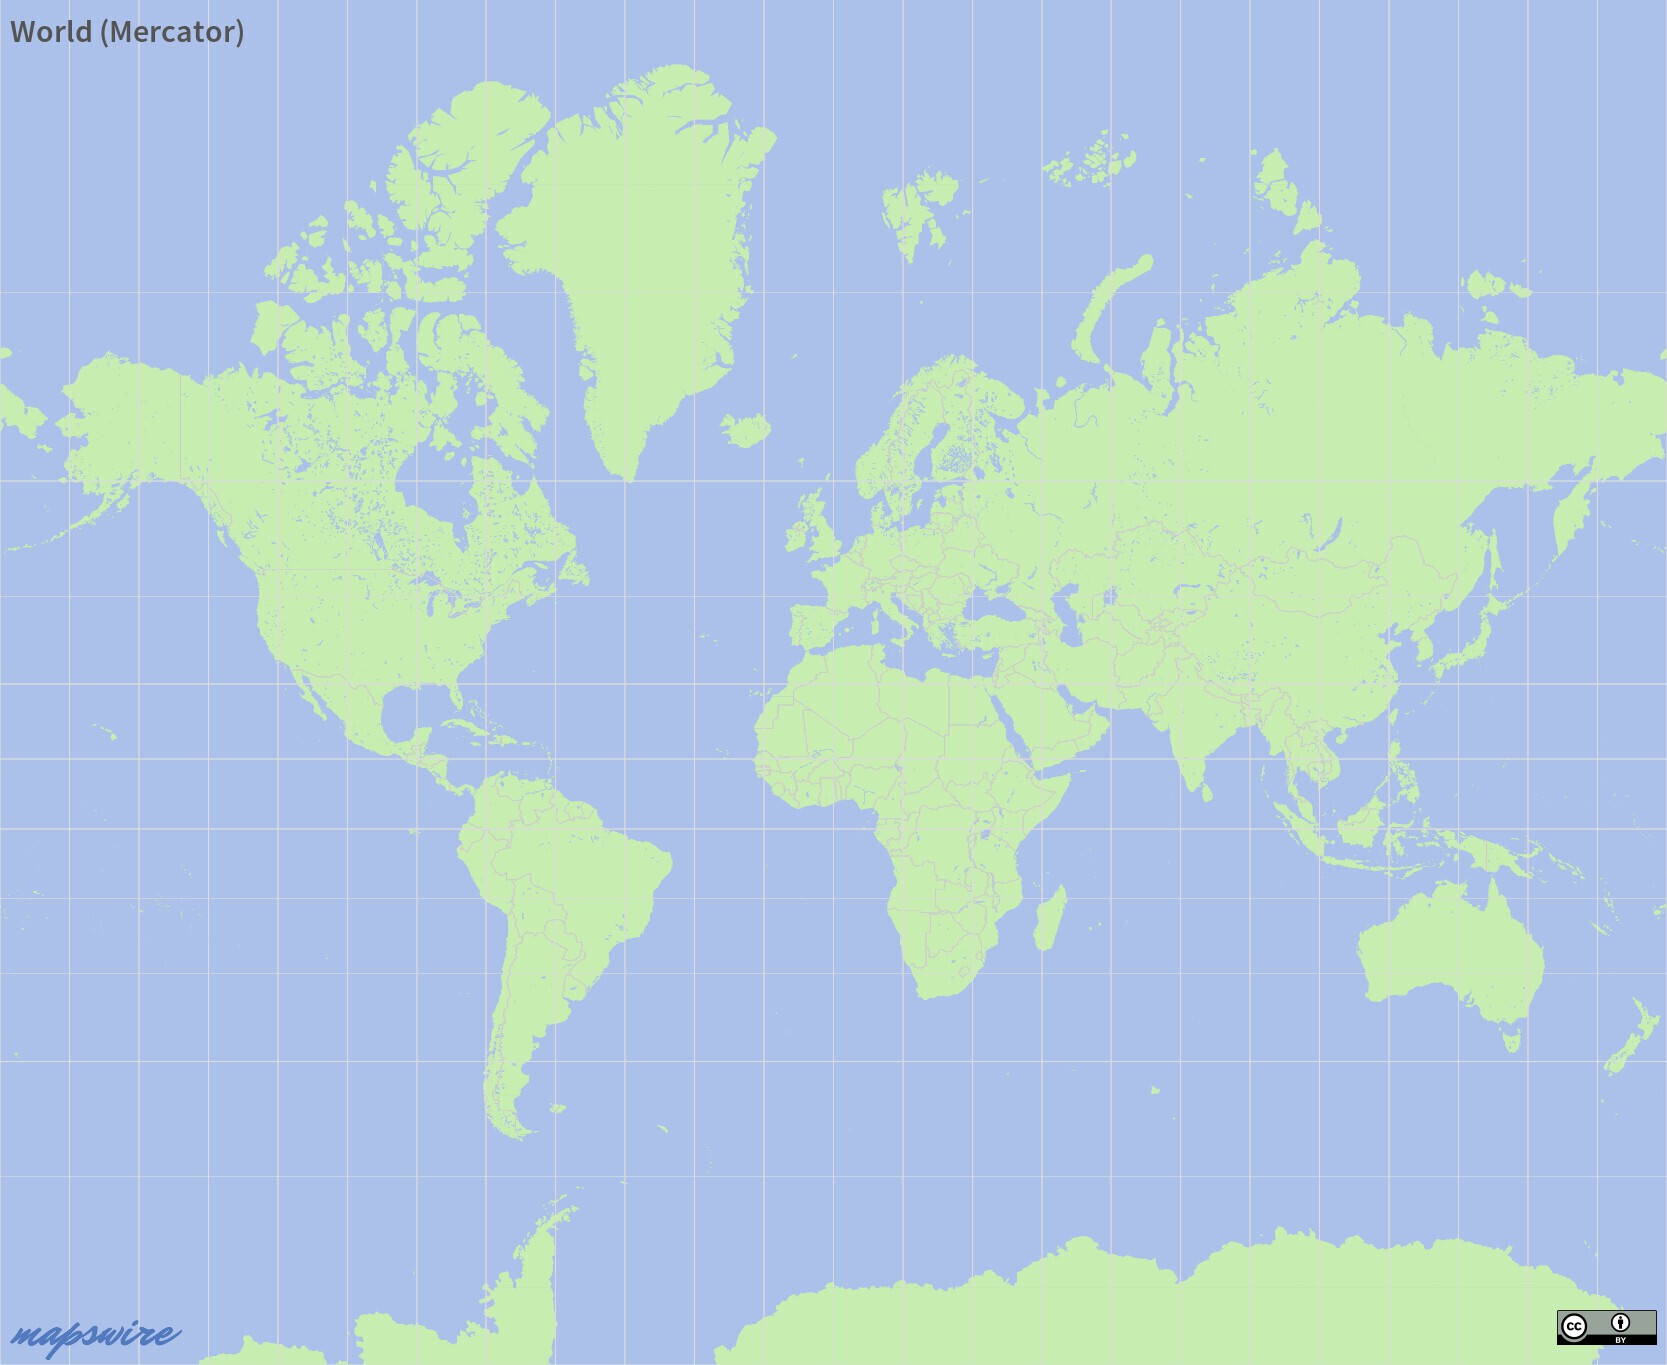 World (Mercator) – License: CC BY 4.0